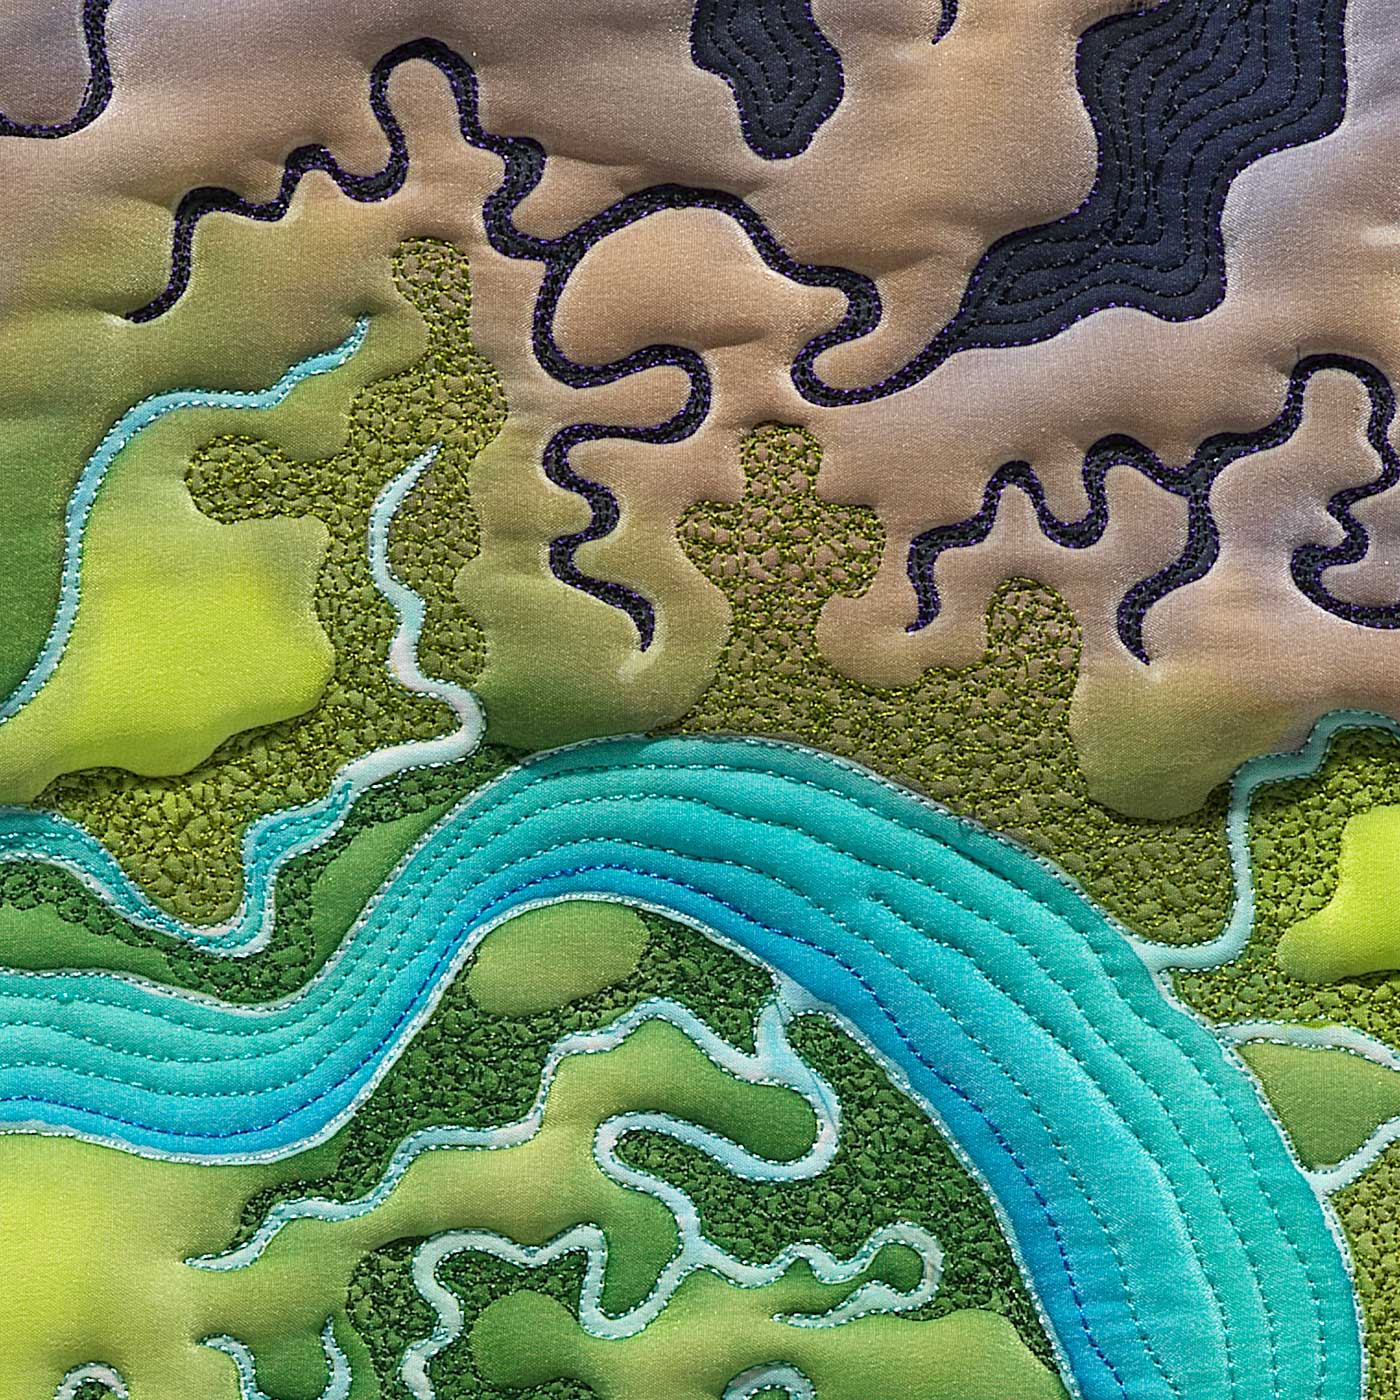 Detail Image of Wetlands Dream Revisited ©2008 Linda Gass